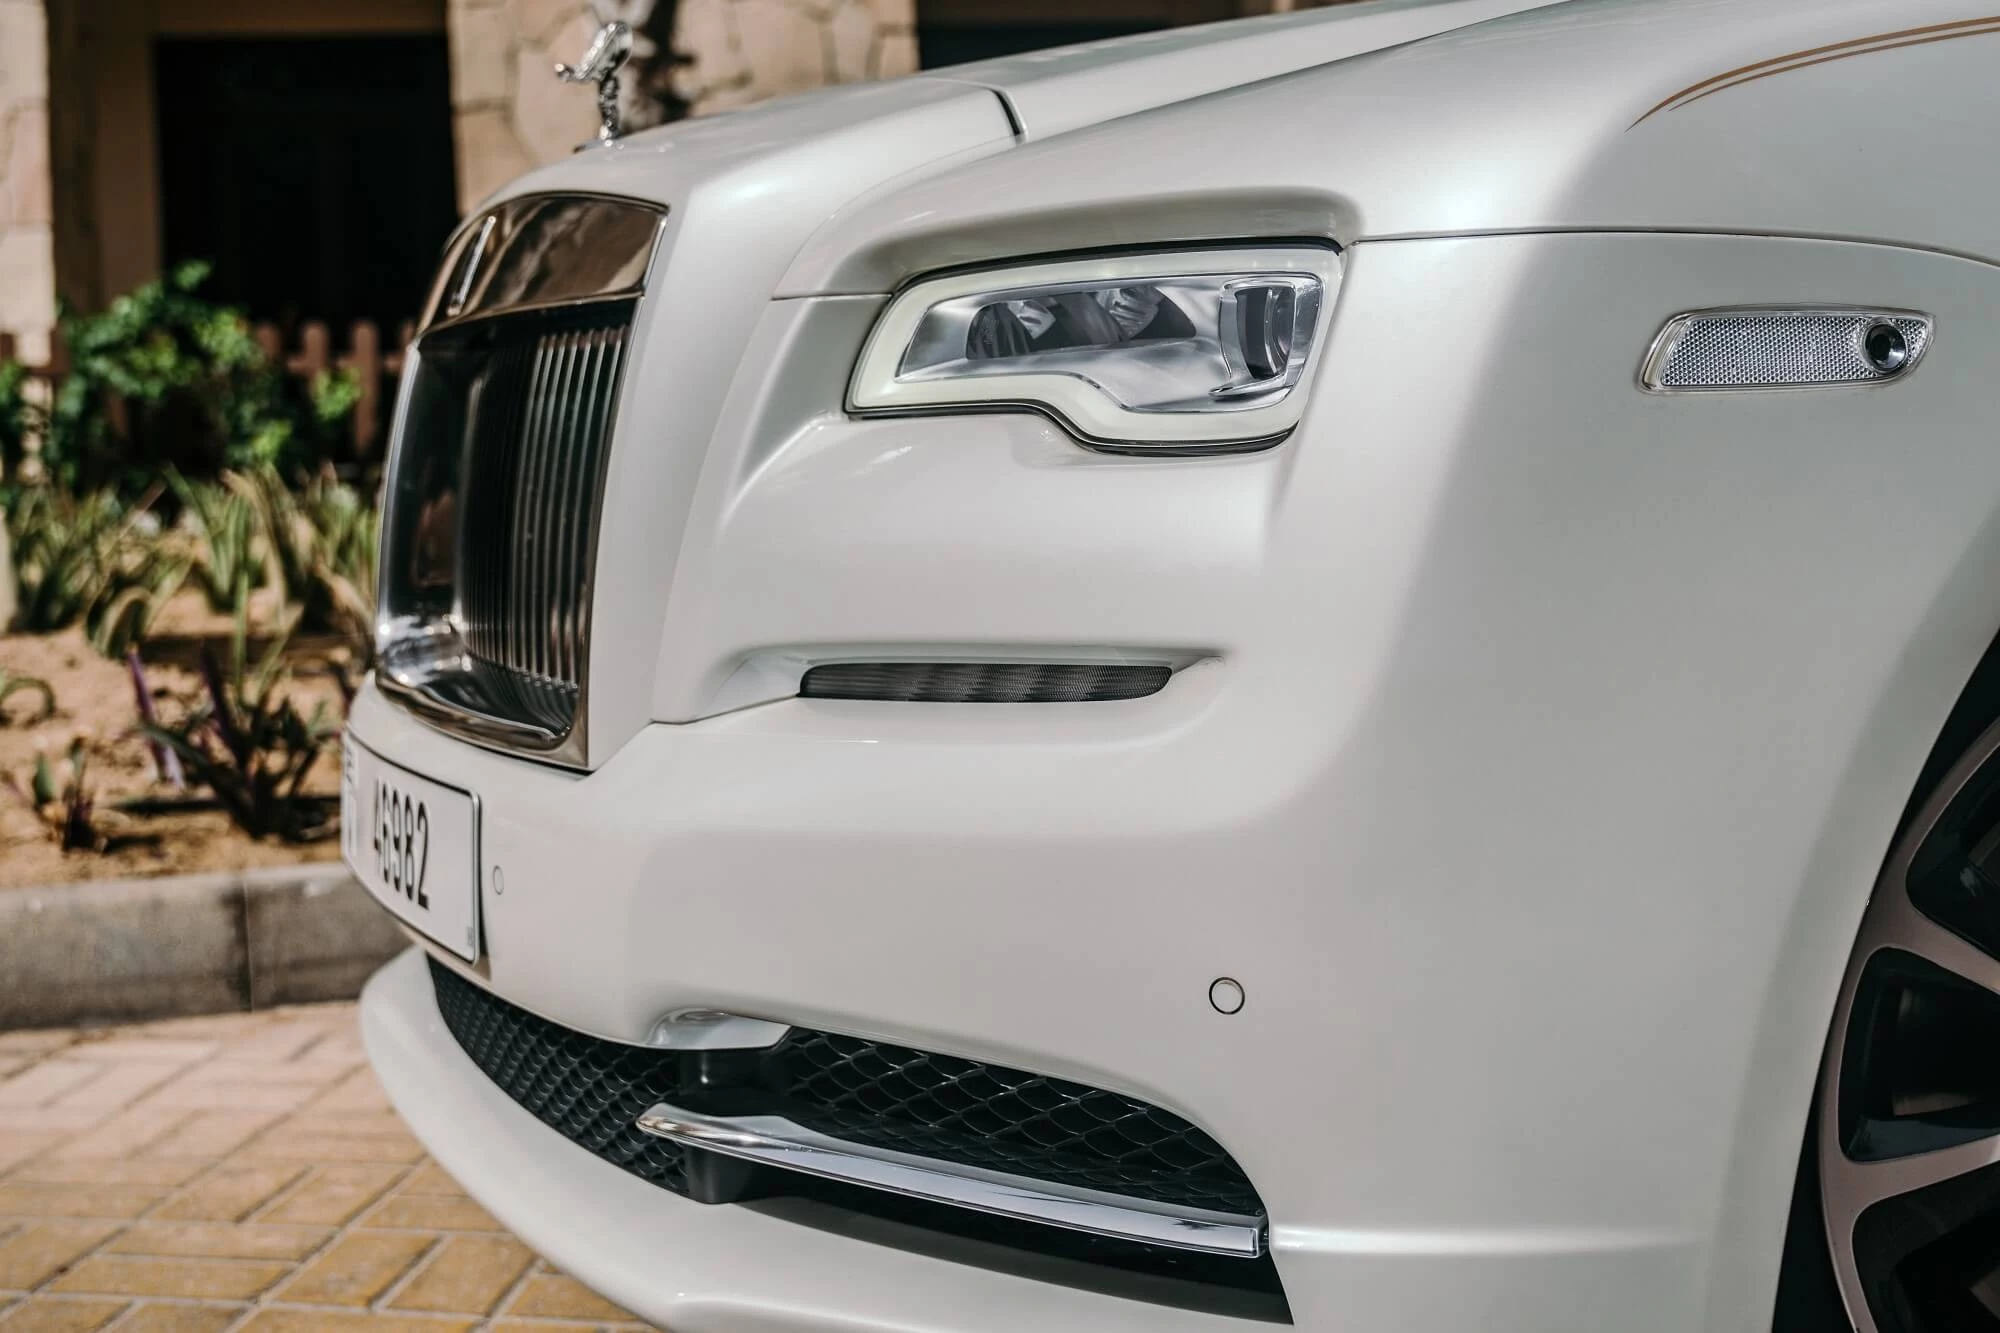 Rolls Royce Wraith Vit